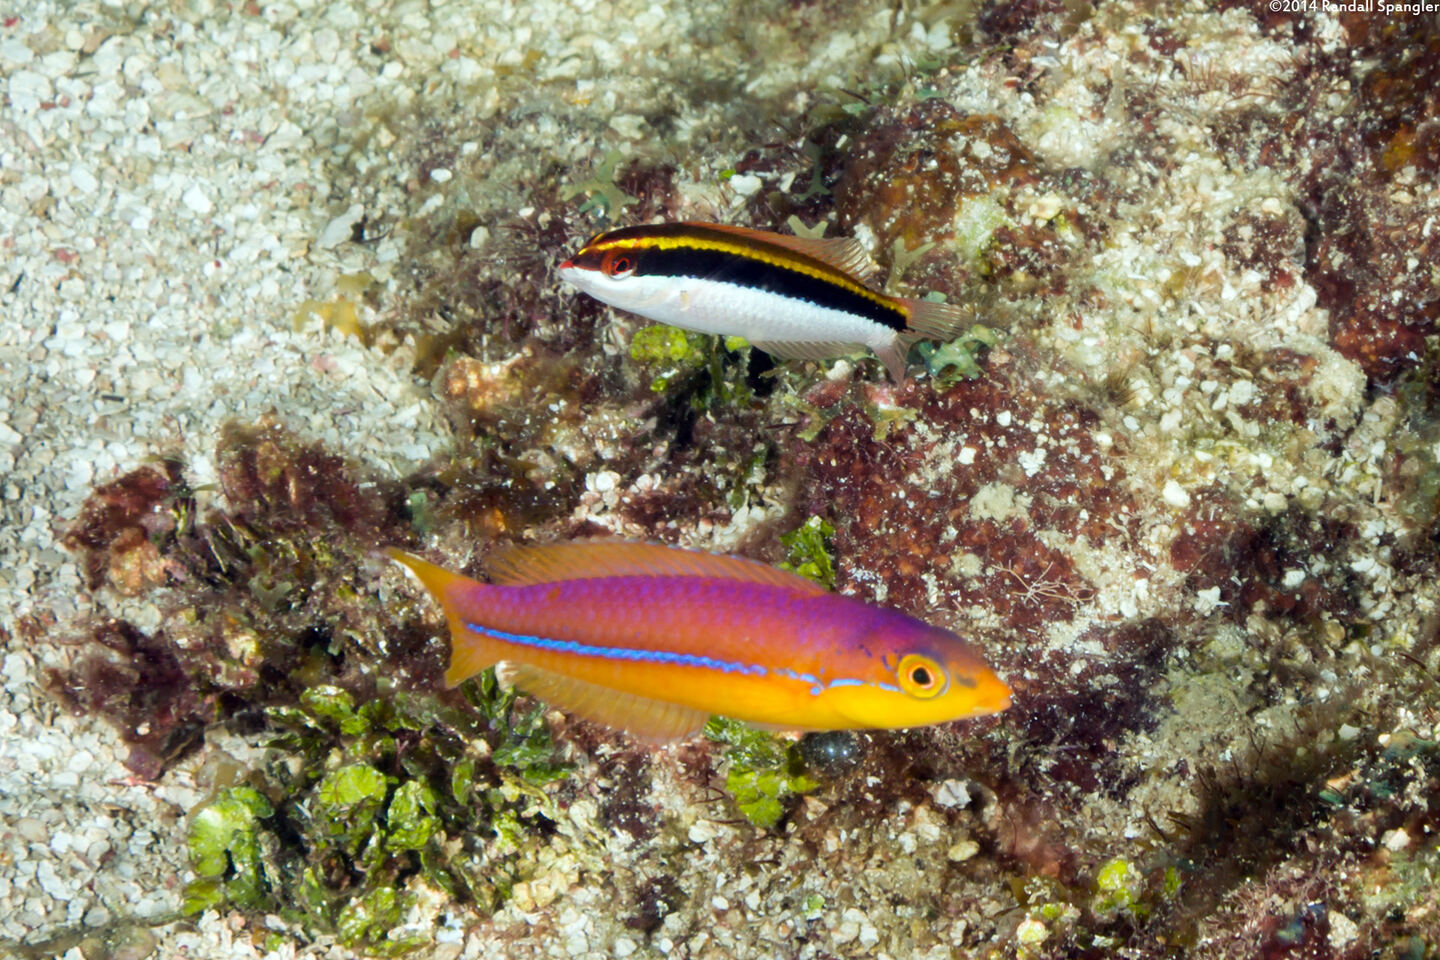 Halichoeres garnoti (Yellowhead Wrasse); Clown wrasse juvenile is the upper fish